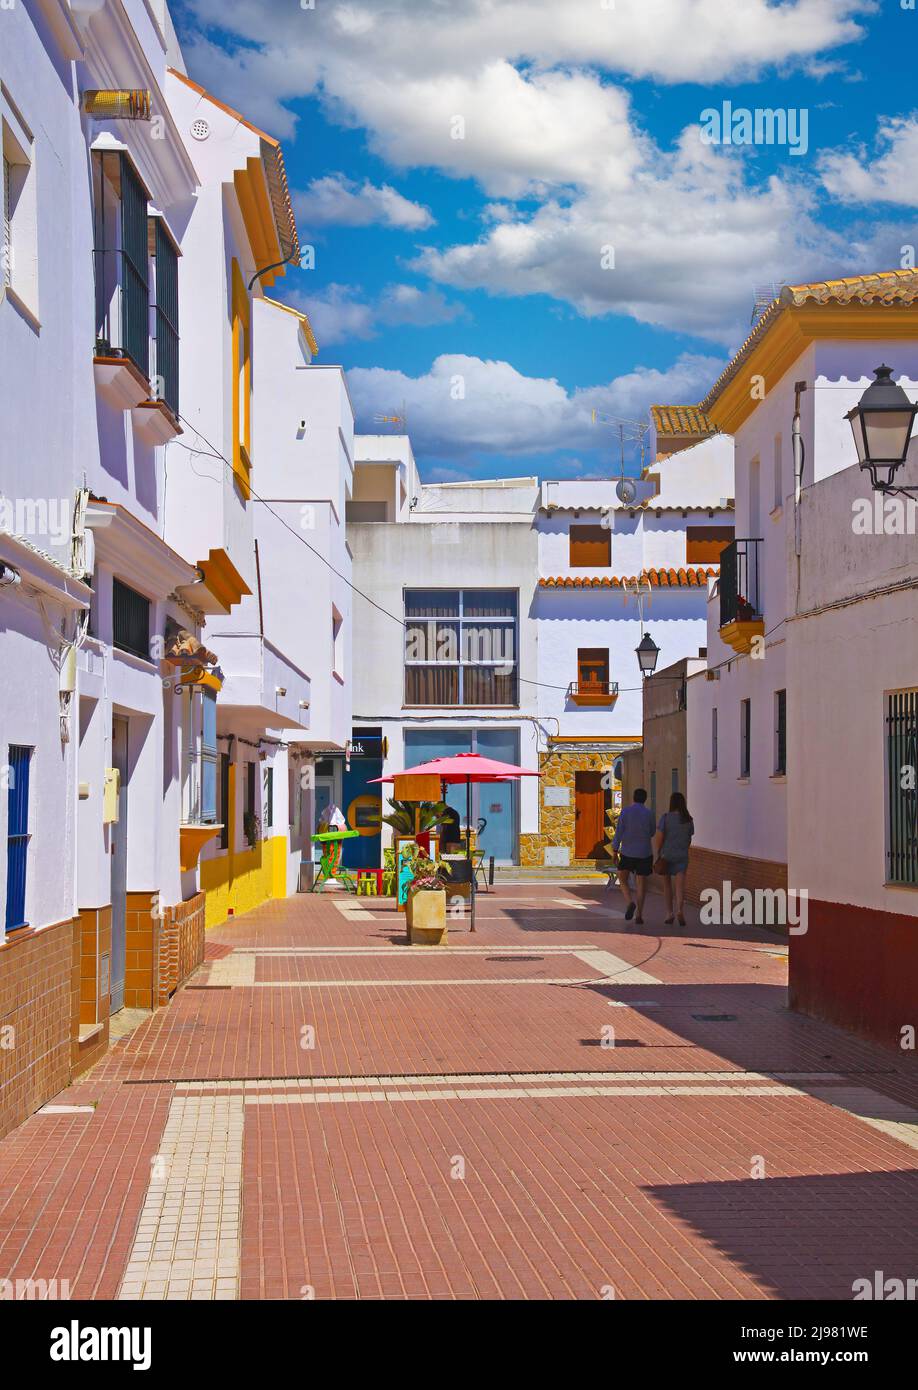 Zahara de los Atunes, Spain - June 1. 2019: Tranquil street scene in typical spanisch atlantic ocean village, empty siesta pedestrian road, white hous Stock Photo